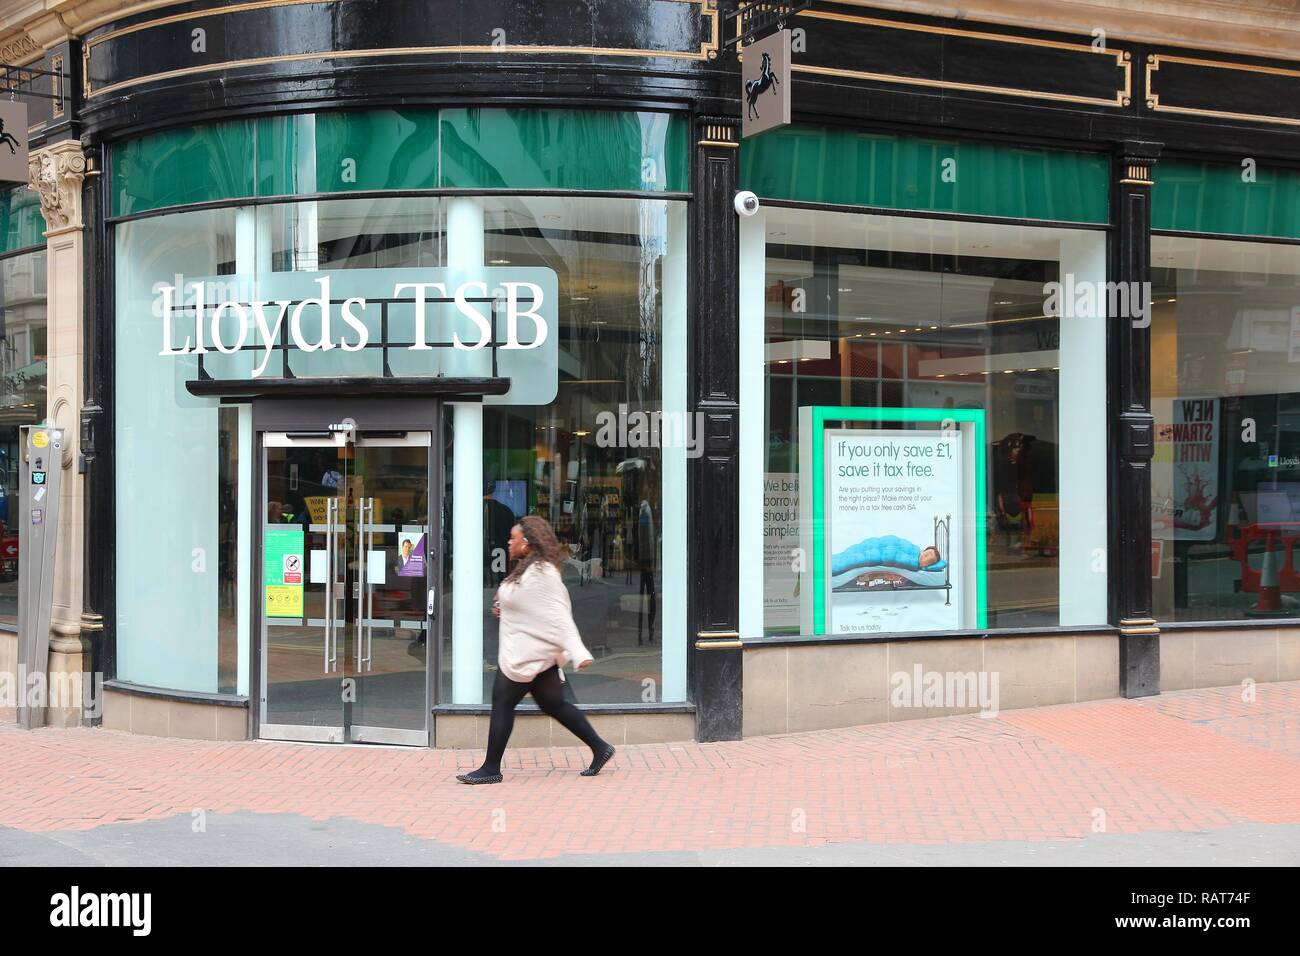 BIRMINGHAM, UK - APRIL 19, 2013: Person walks by Lloyds TSB bank in Birmingham, UK. Lloyds Banking Group had GBP 23.5 billion of revenue in 2011 Stock Photo